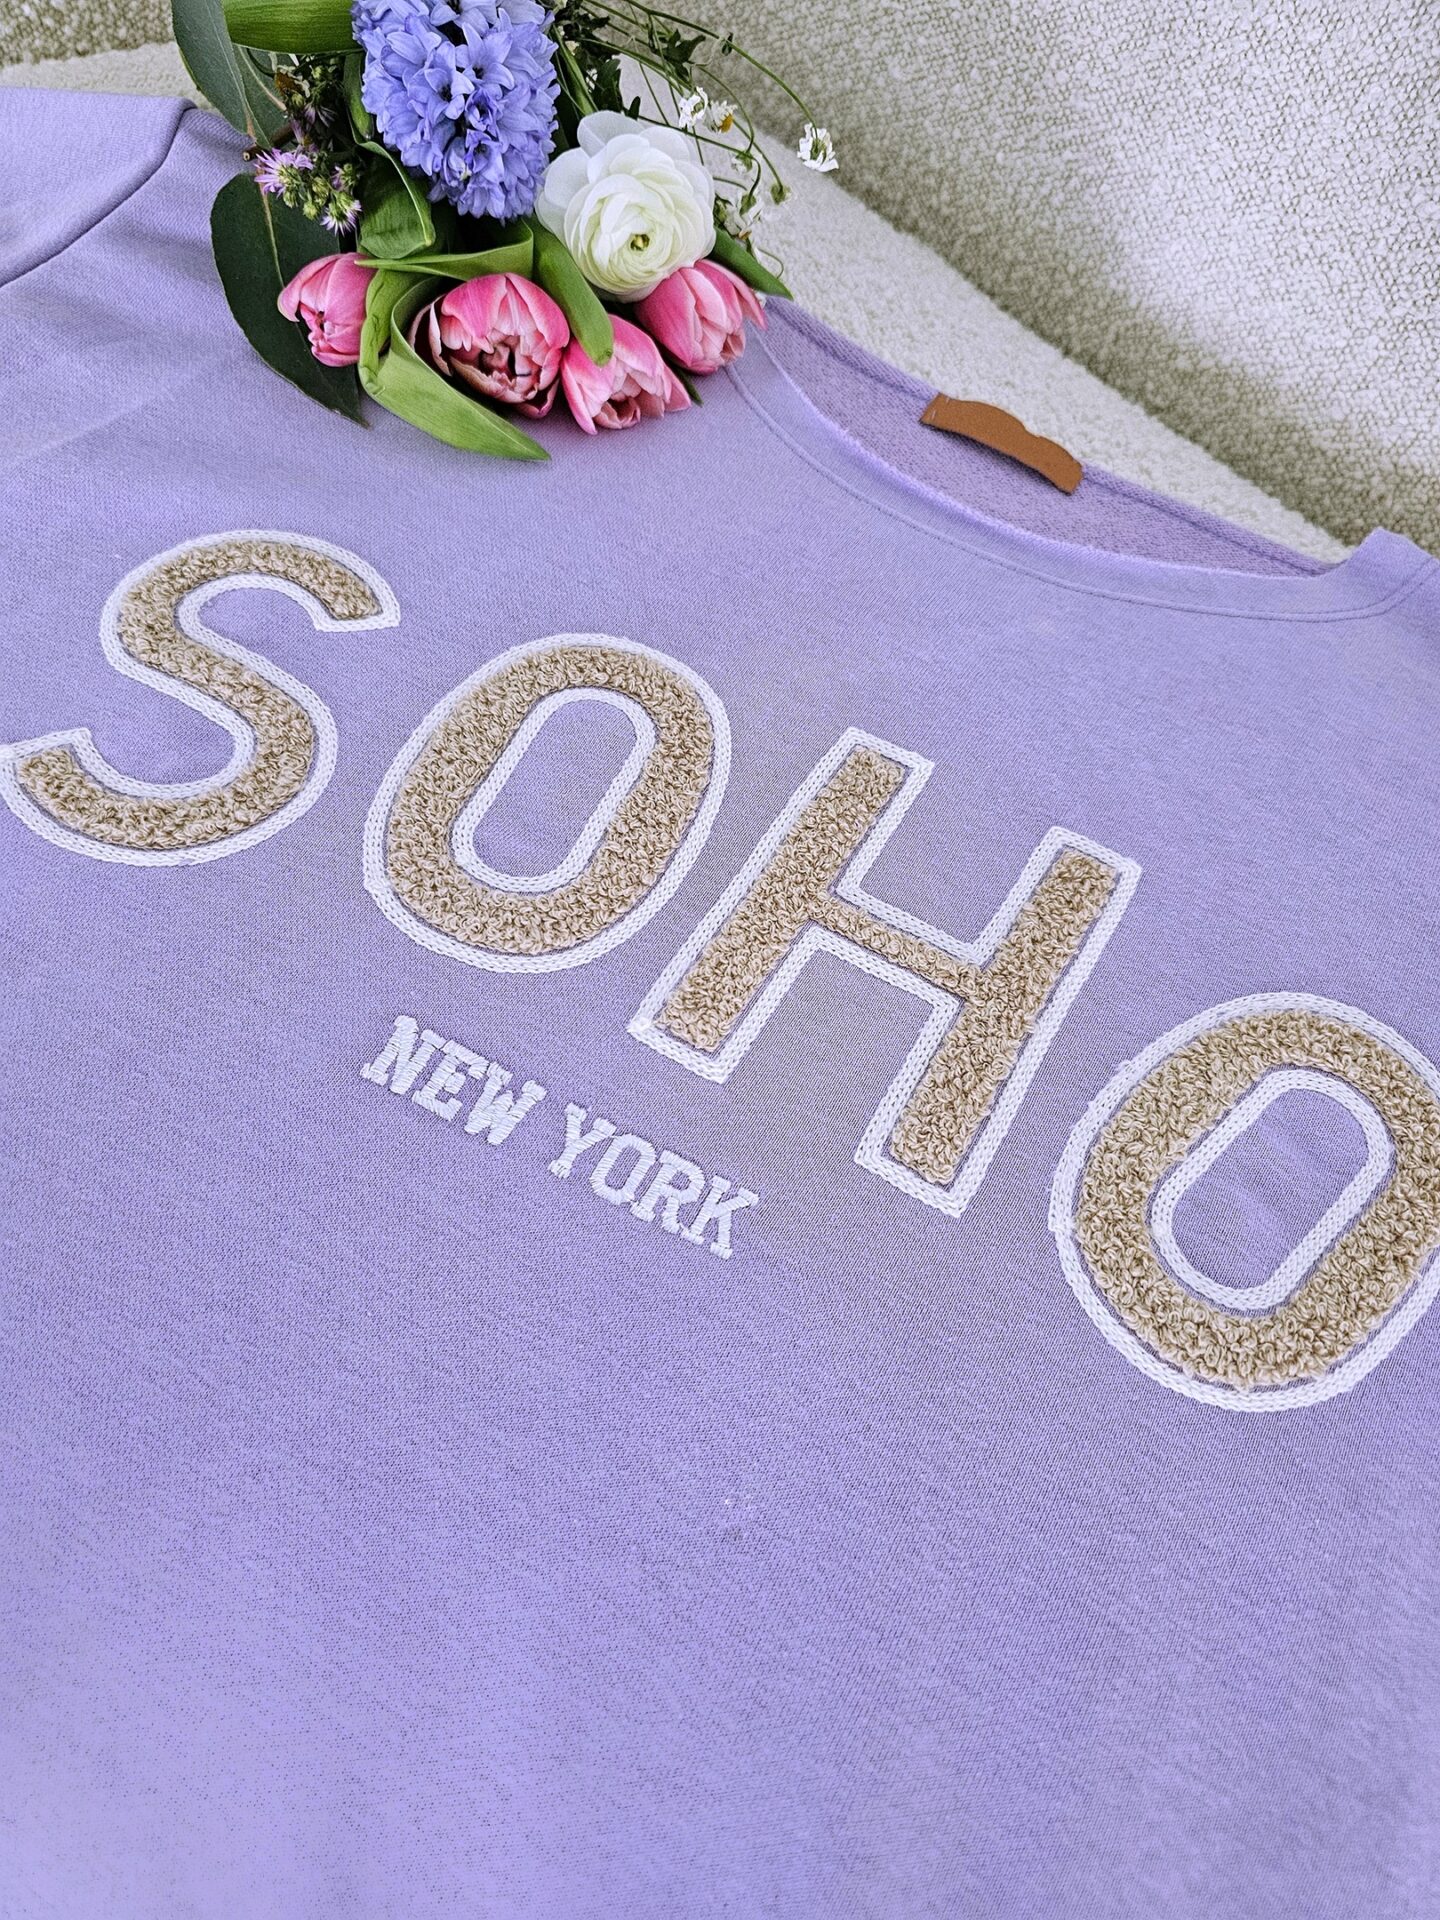 Sweatshirt SOHO – versch. Farben